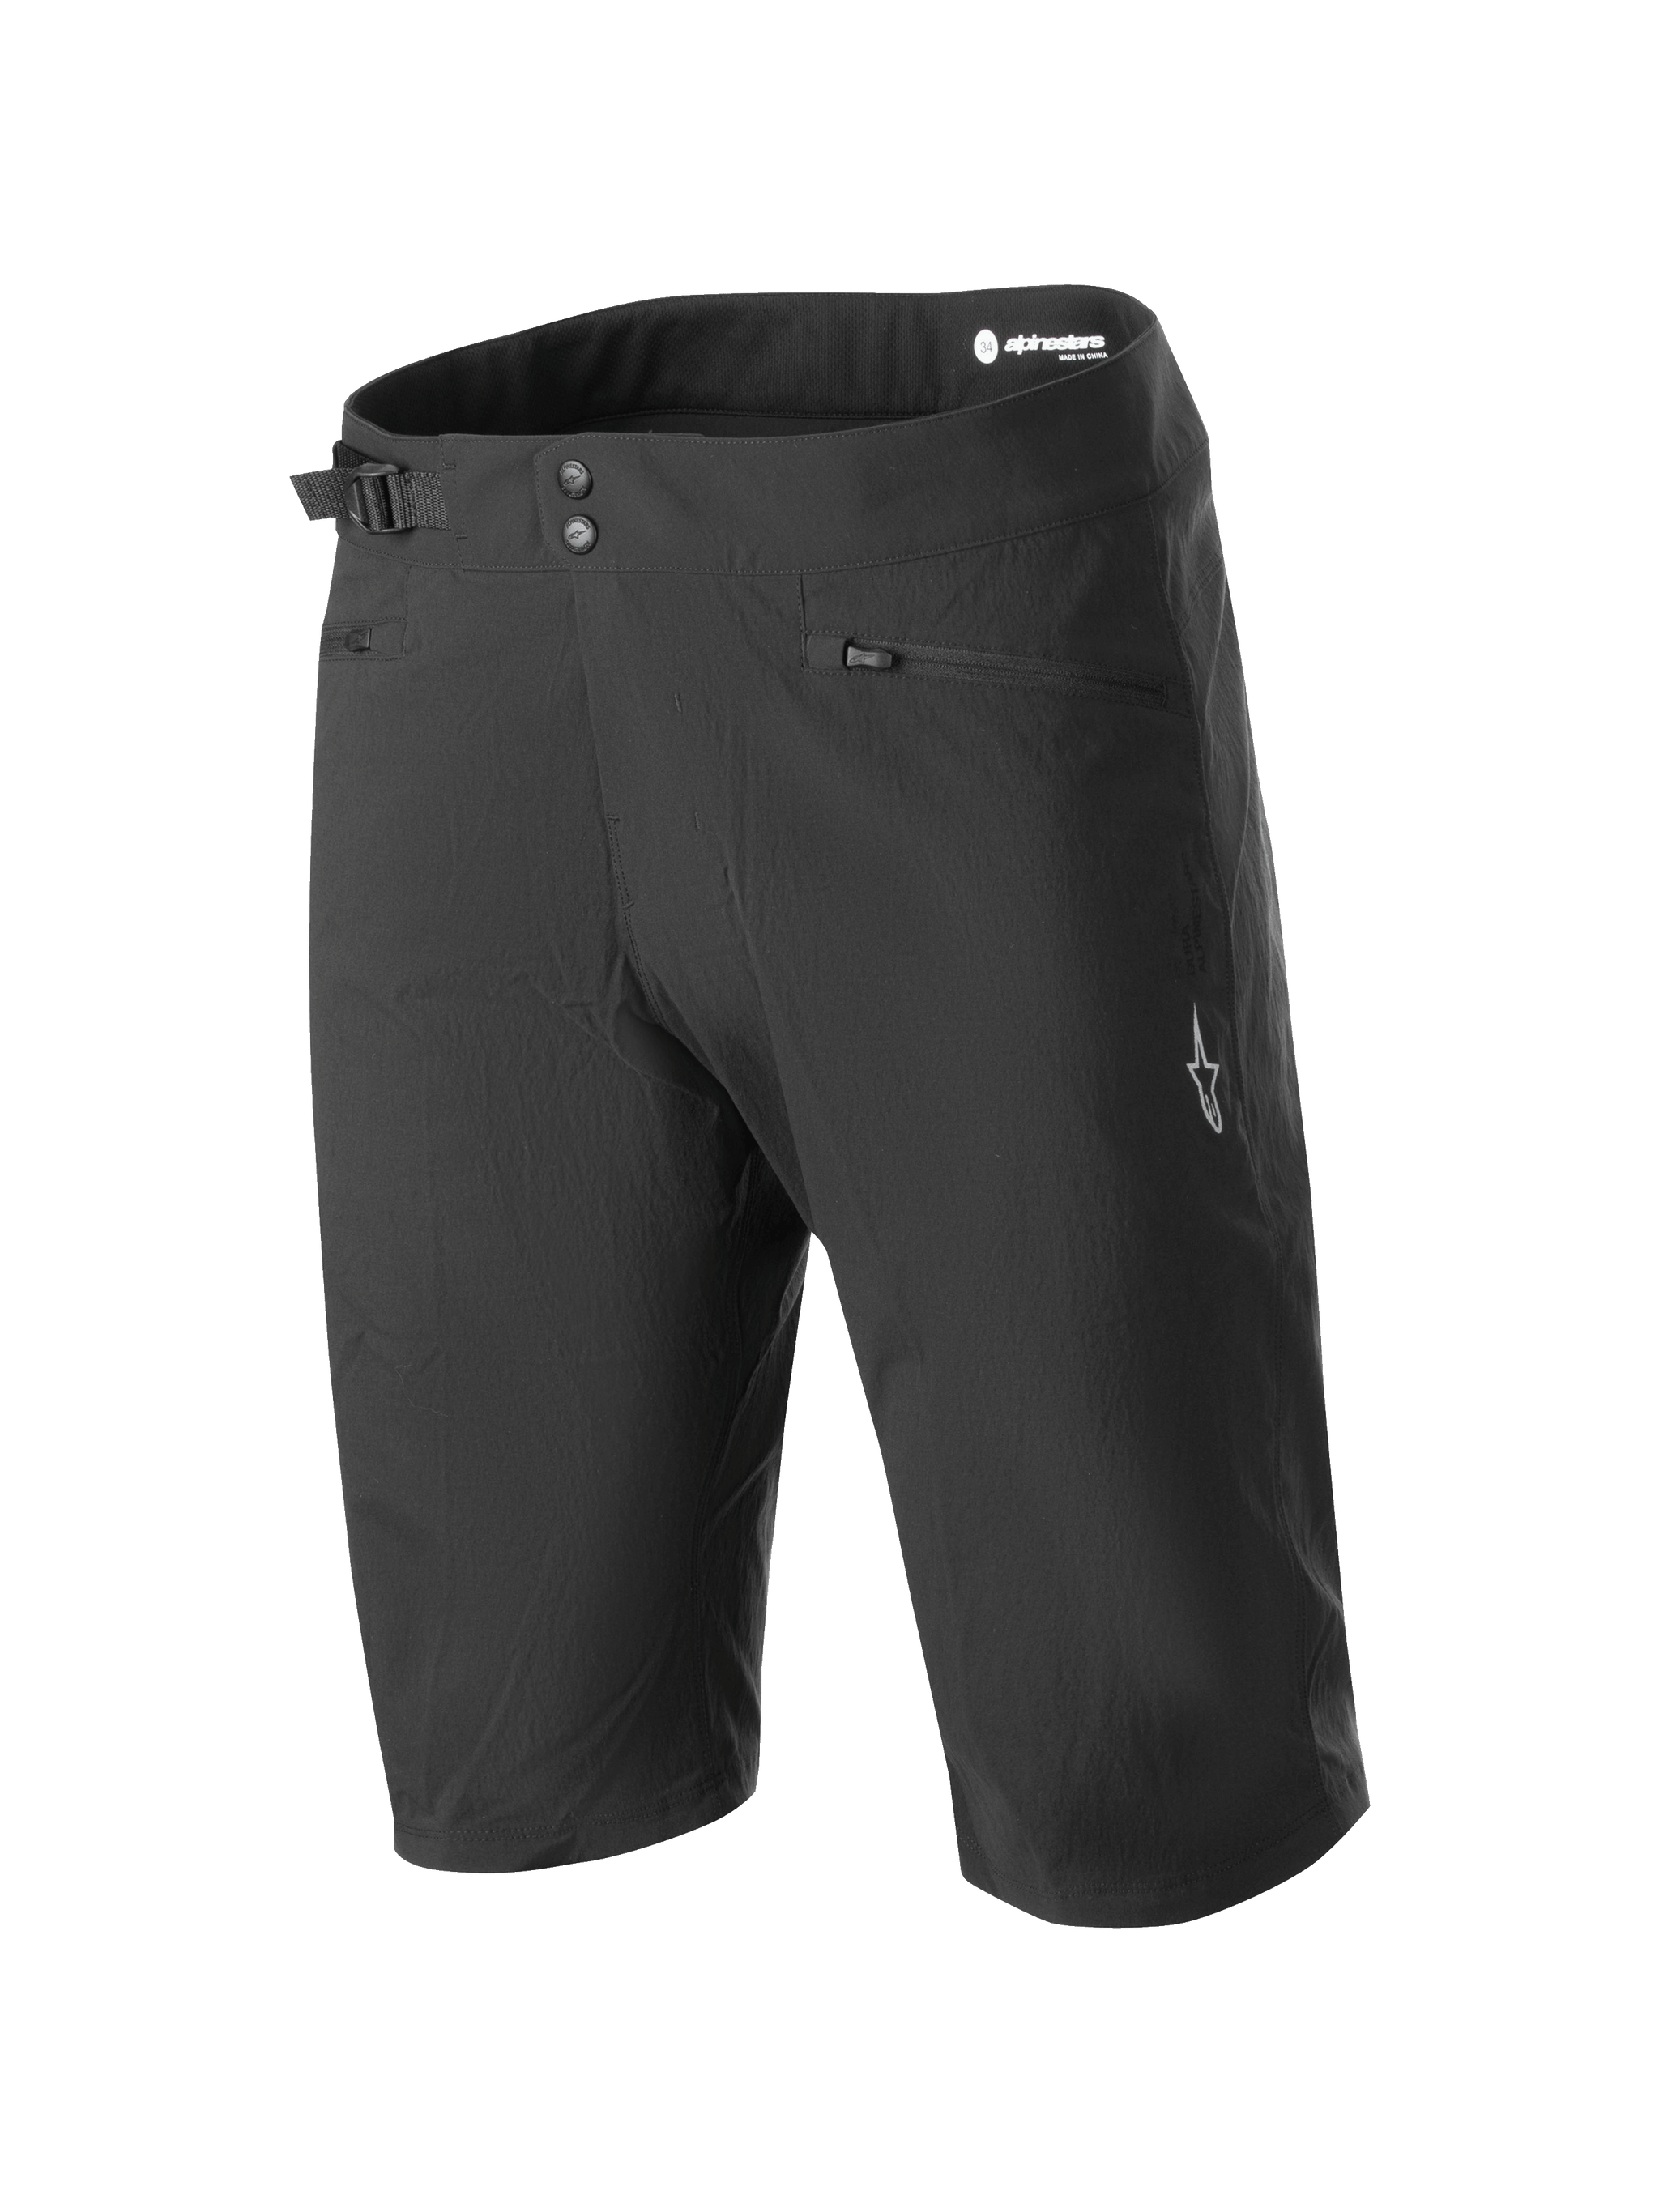 A-Dura Liner Pantalones cortos